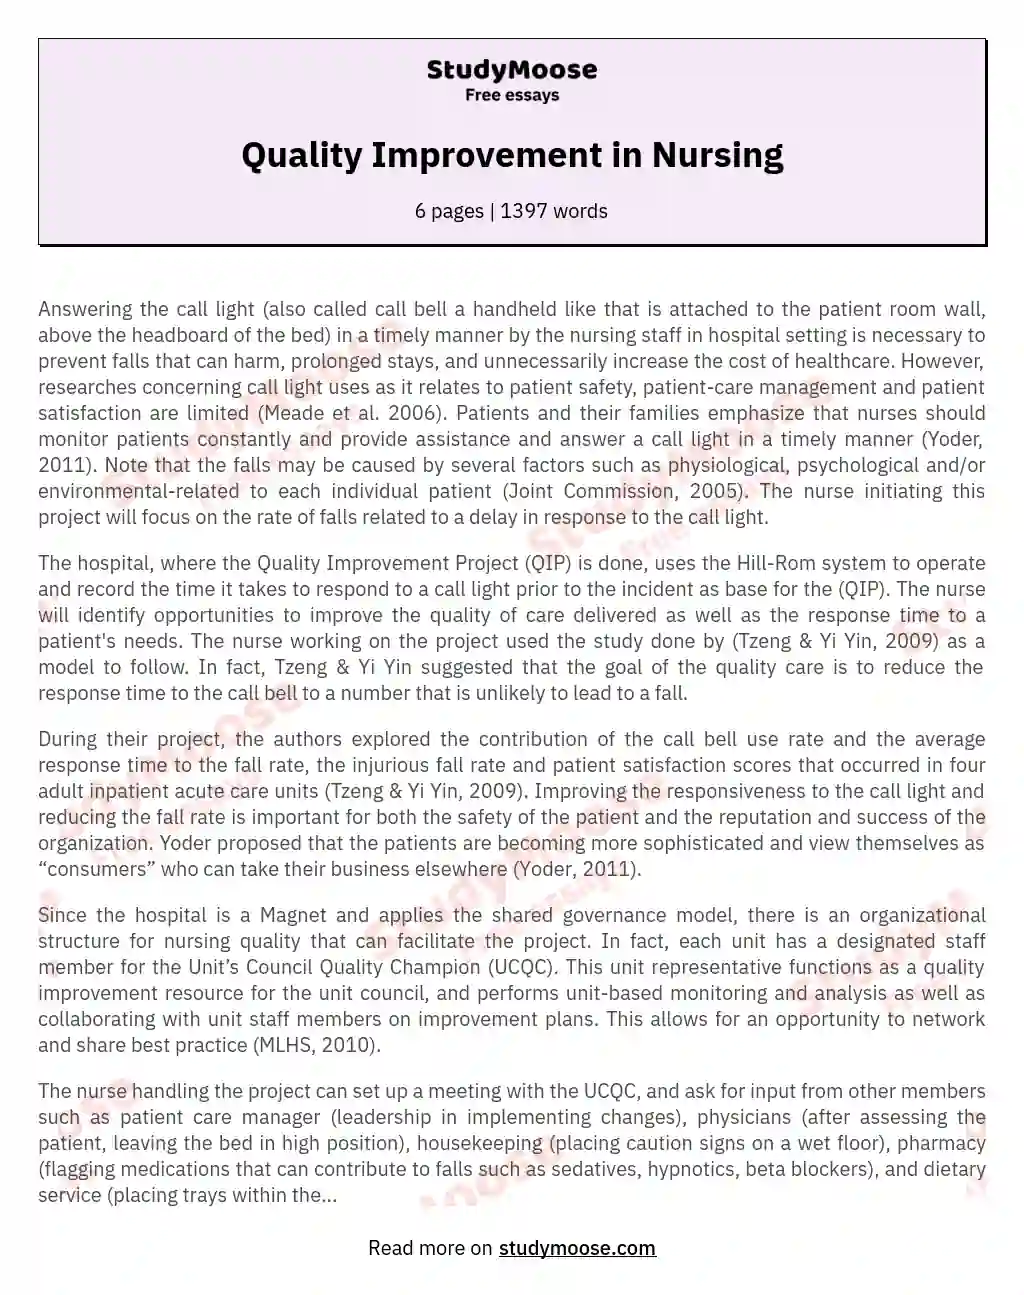 Quality Improvement in Nursing essay